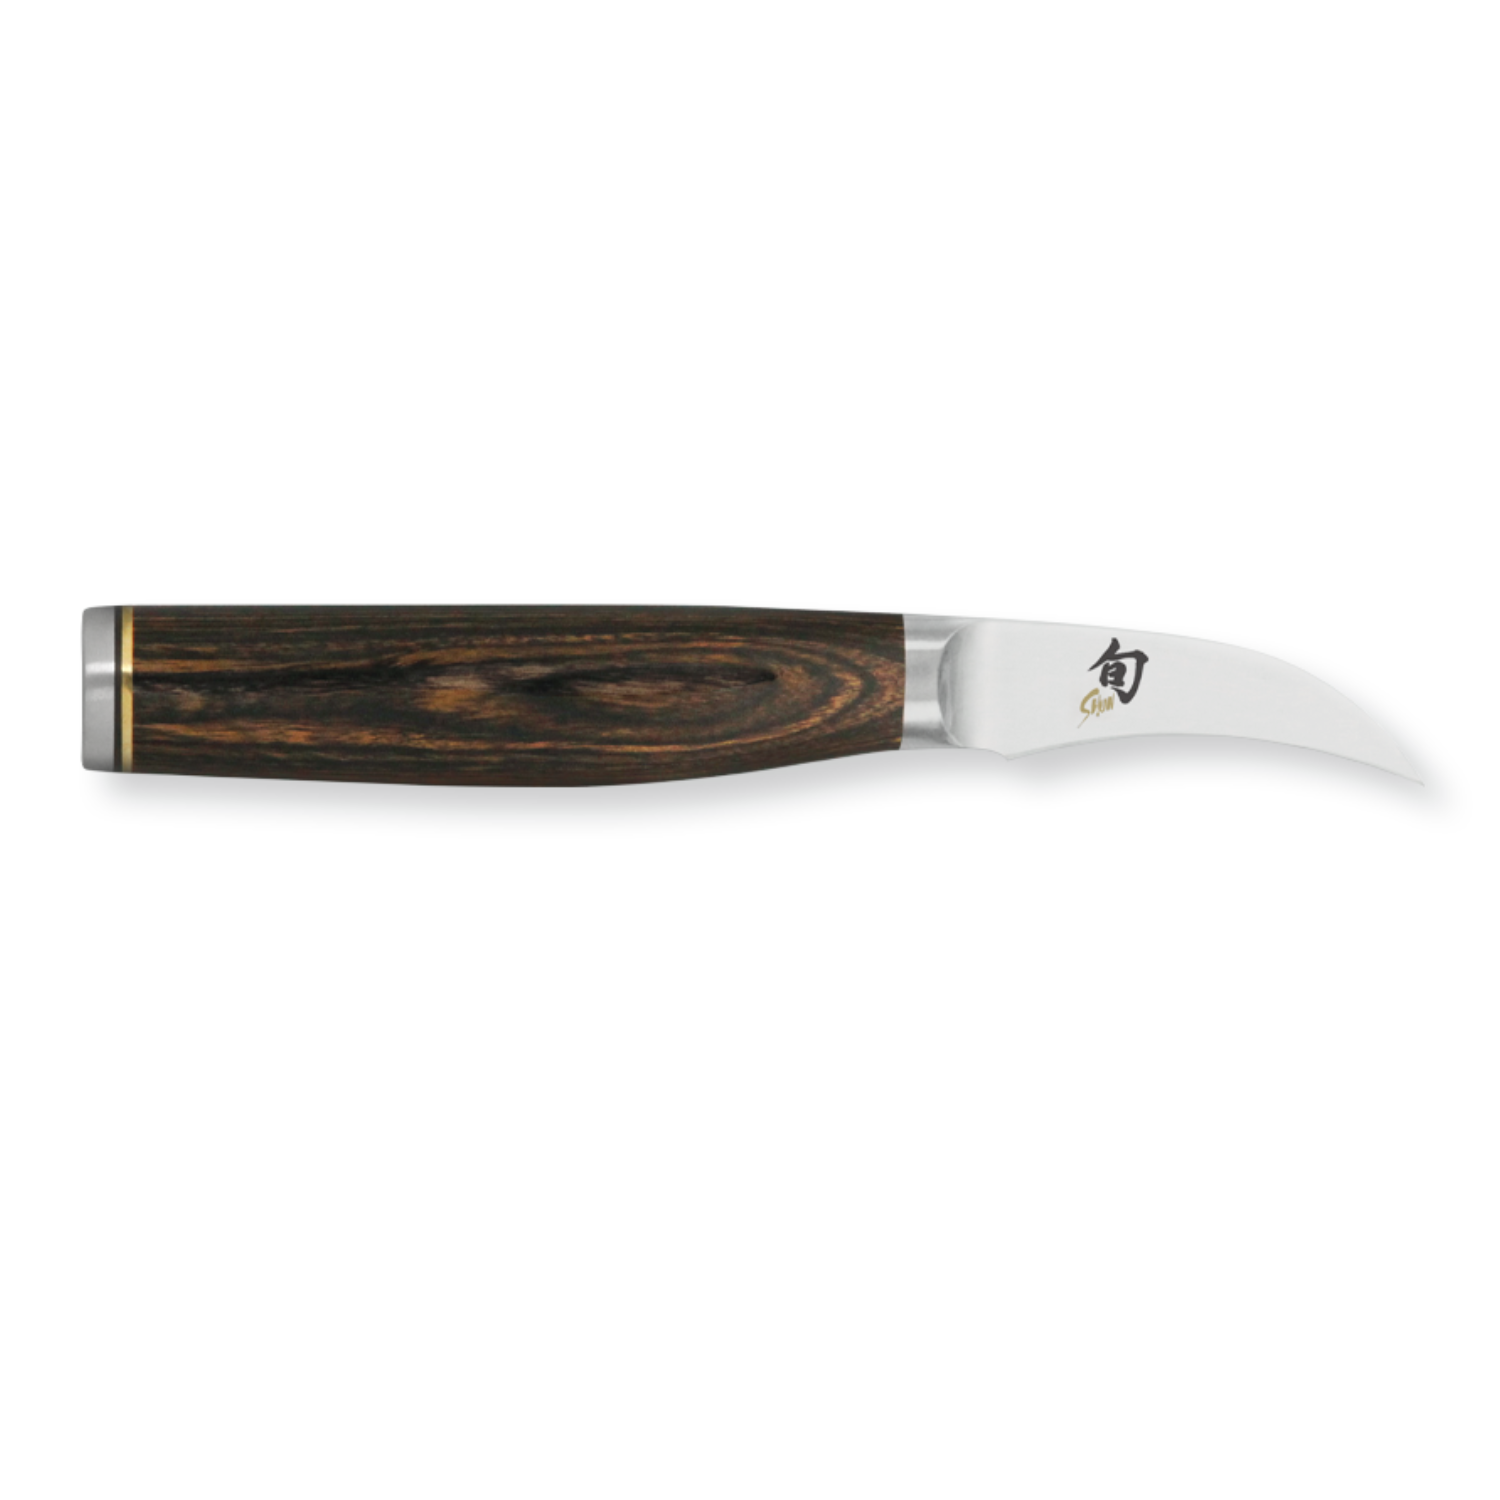 Kai Shun Premier Peeling Knife 5cm